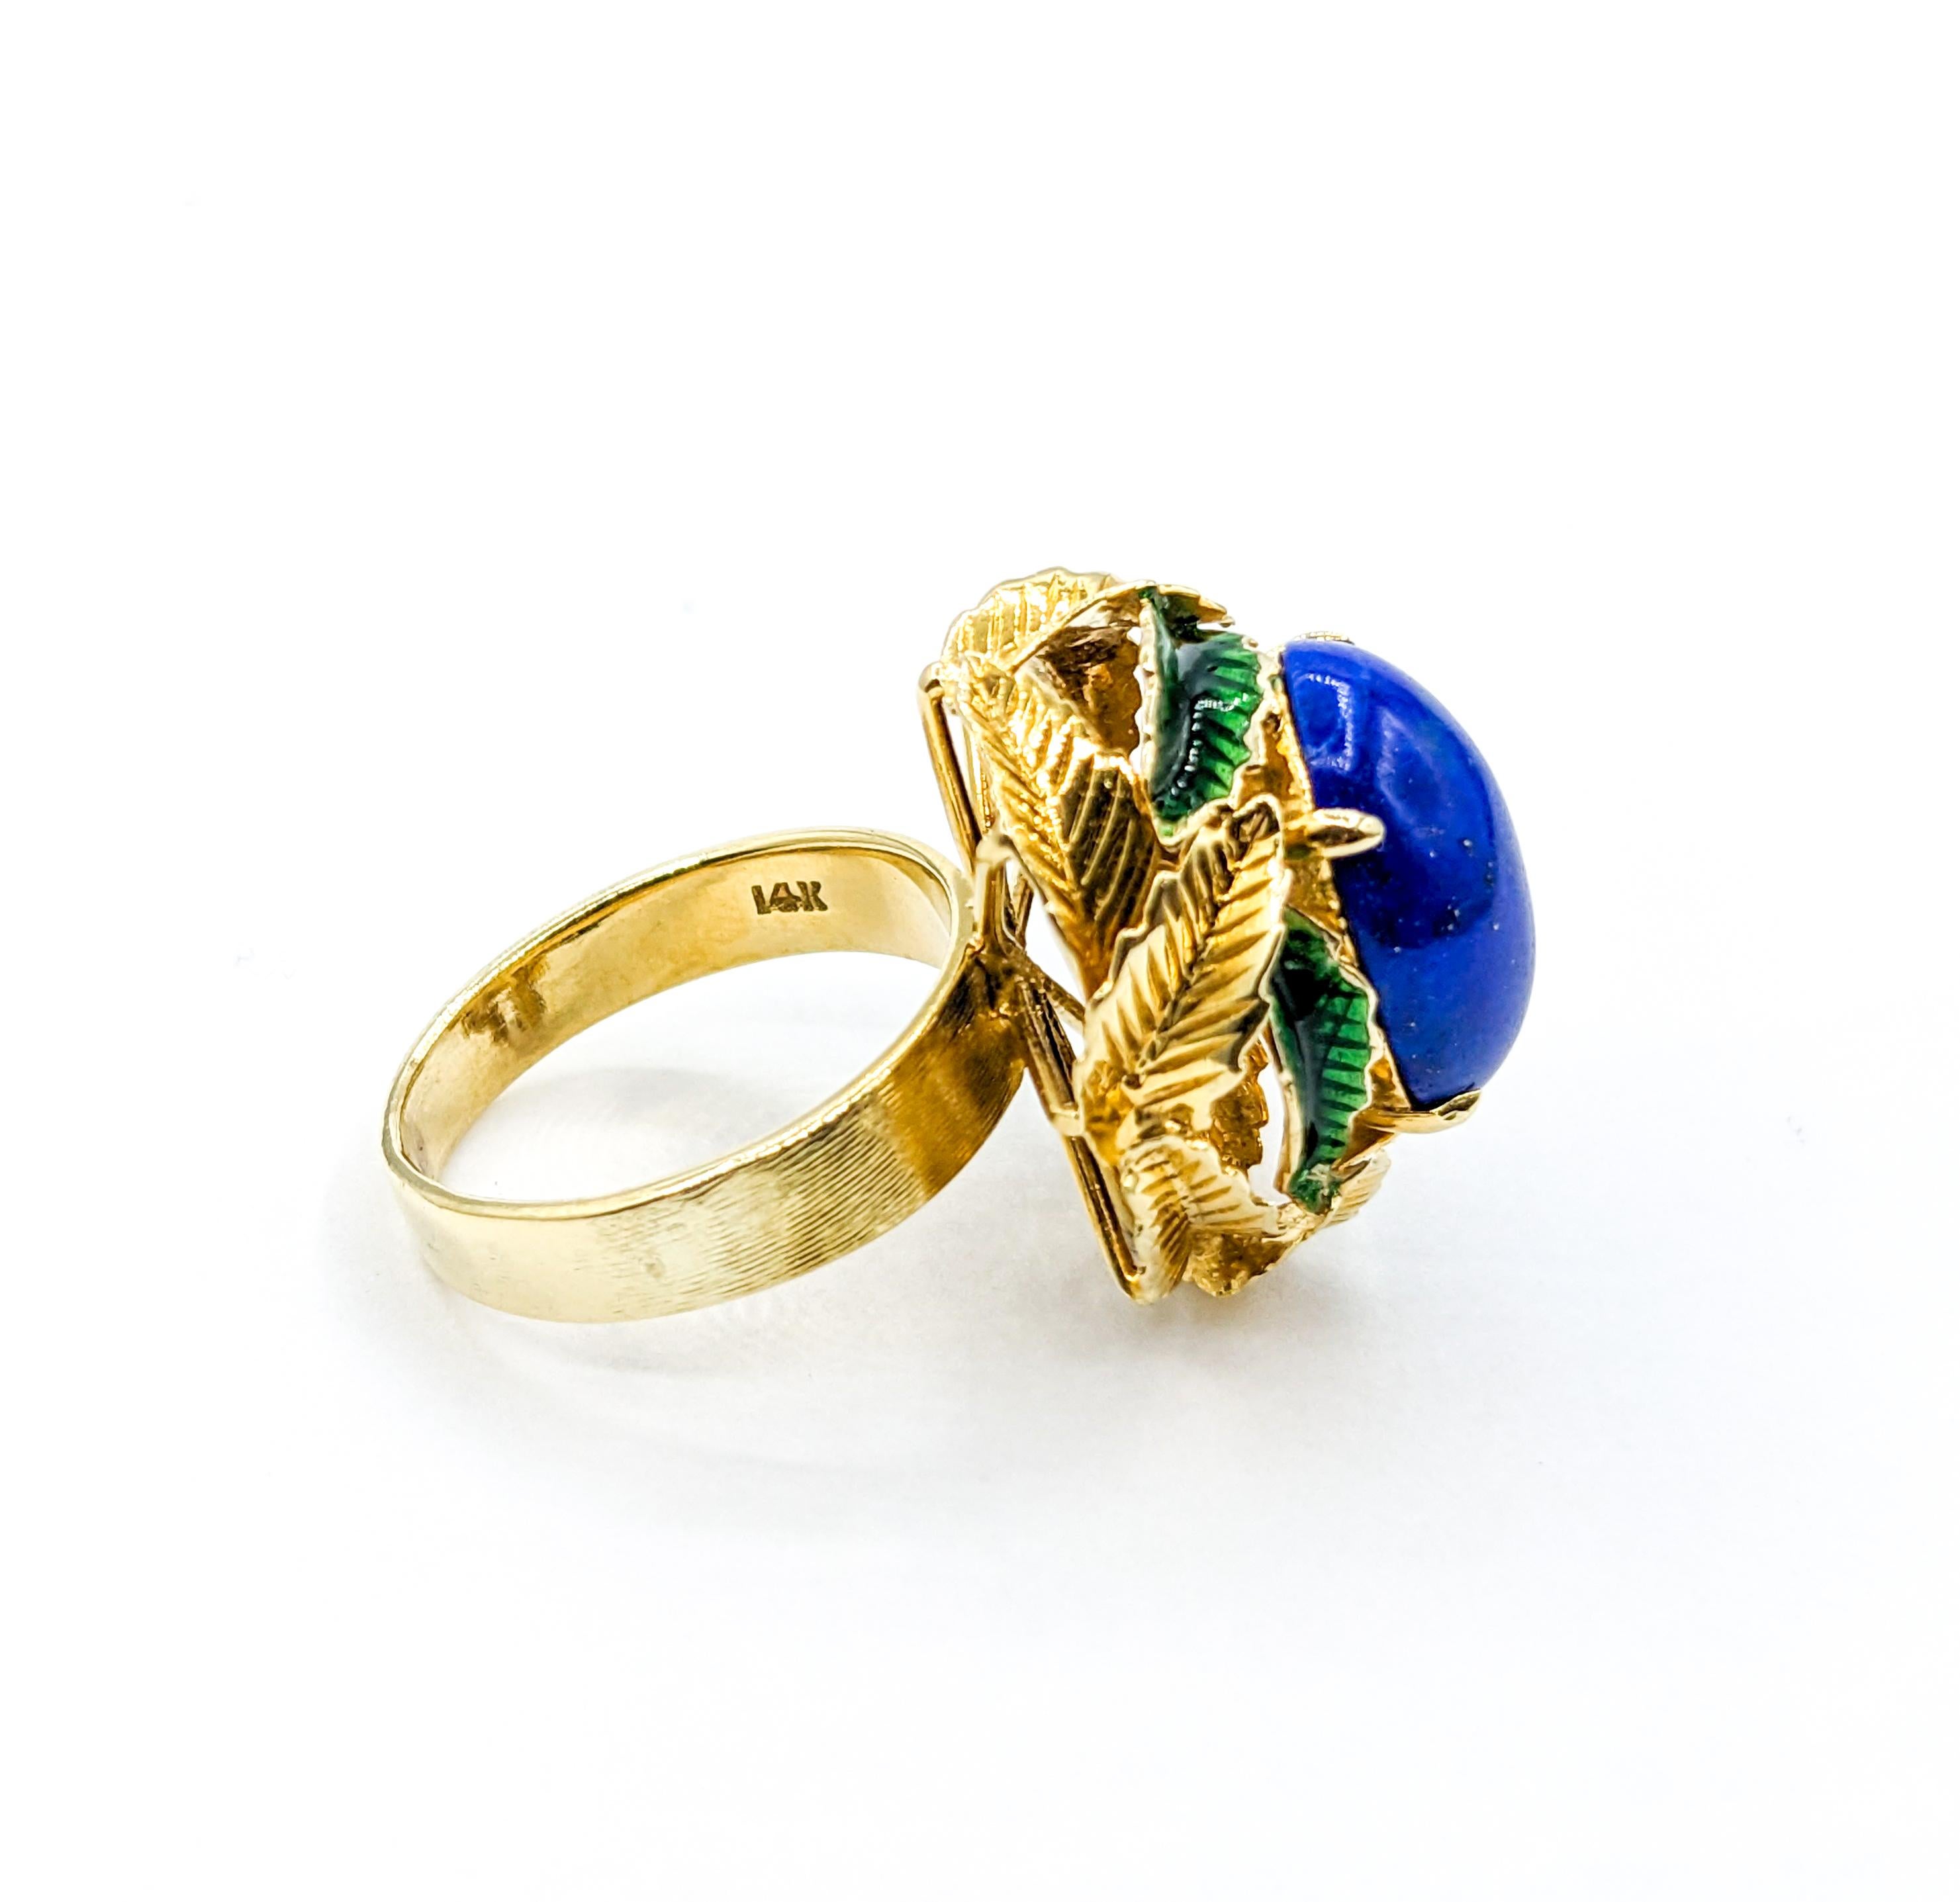  Lapis Cabochon Ring with Enamel Leaf Details For Sale 3